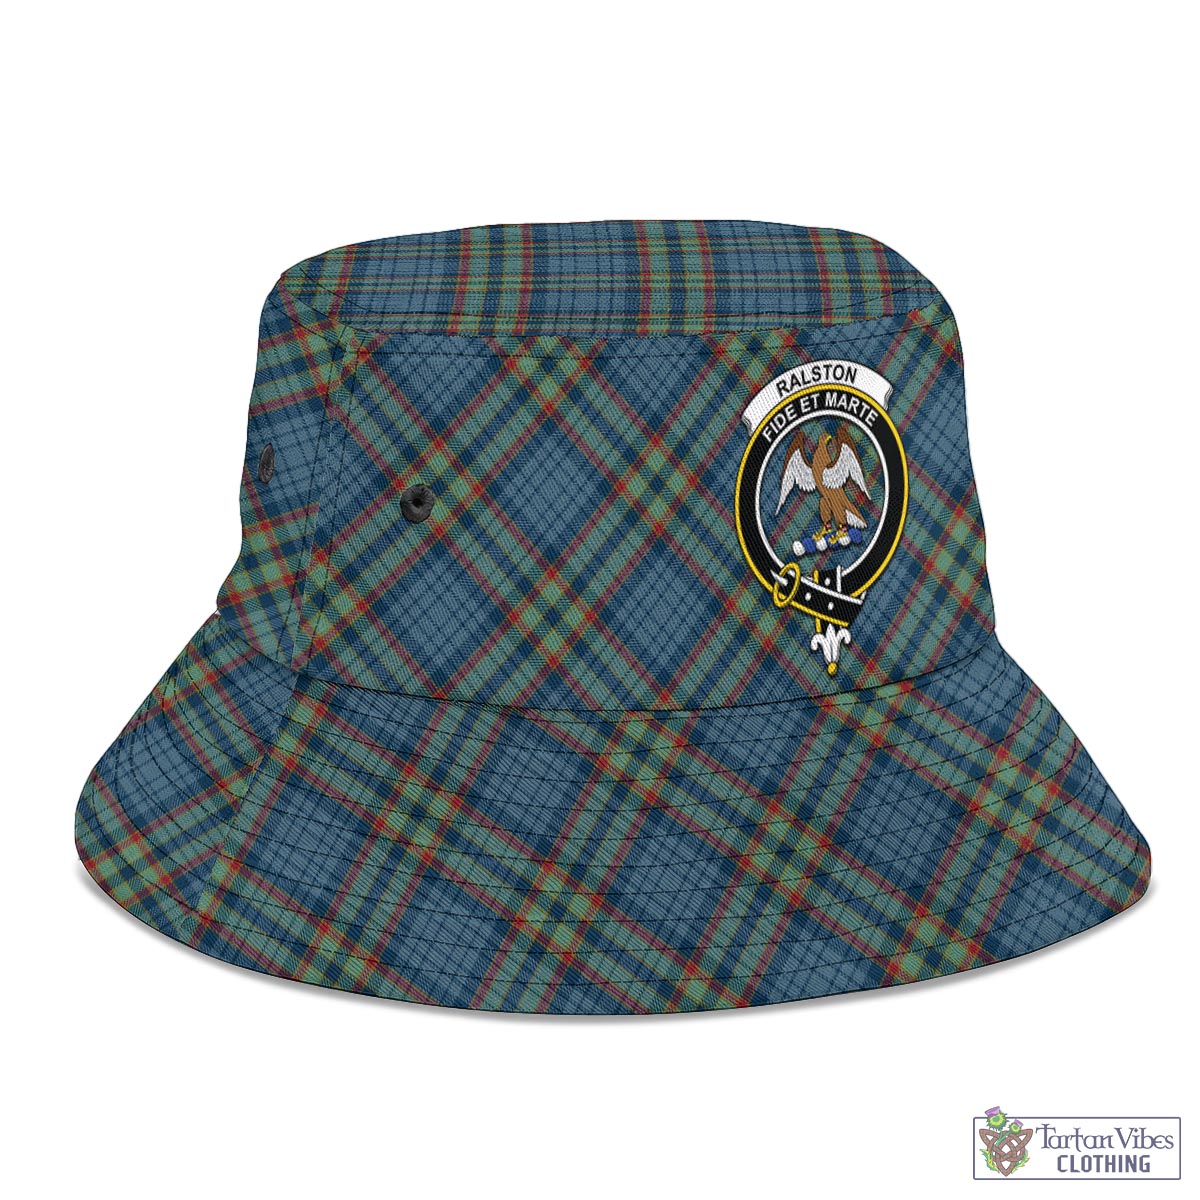 Tartan Vibes Clothing Ralston UK Tartan Bucket Hat with Family Crest